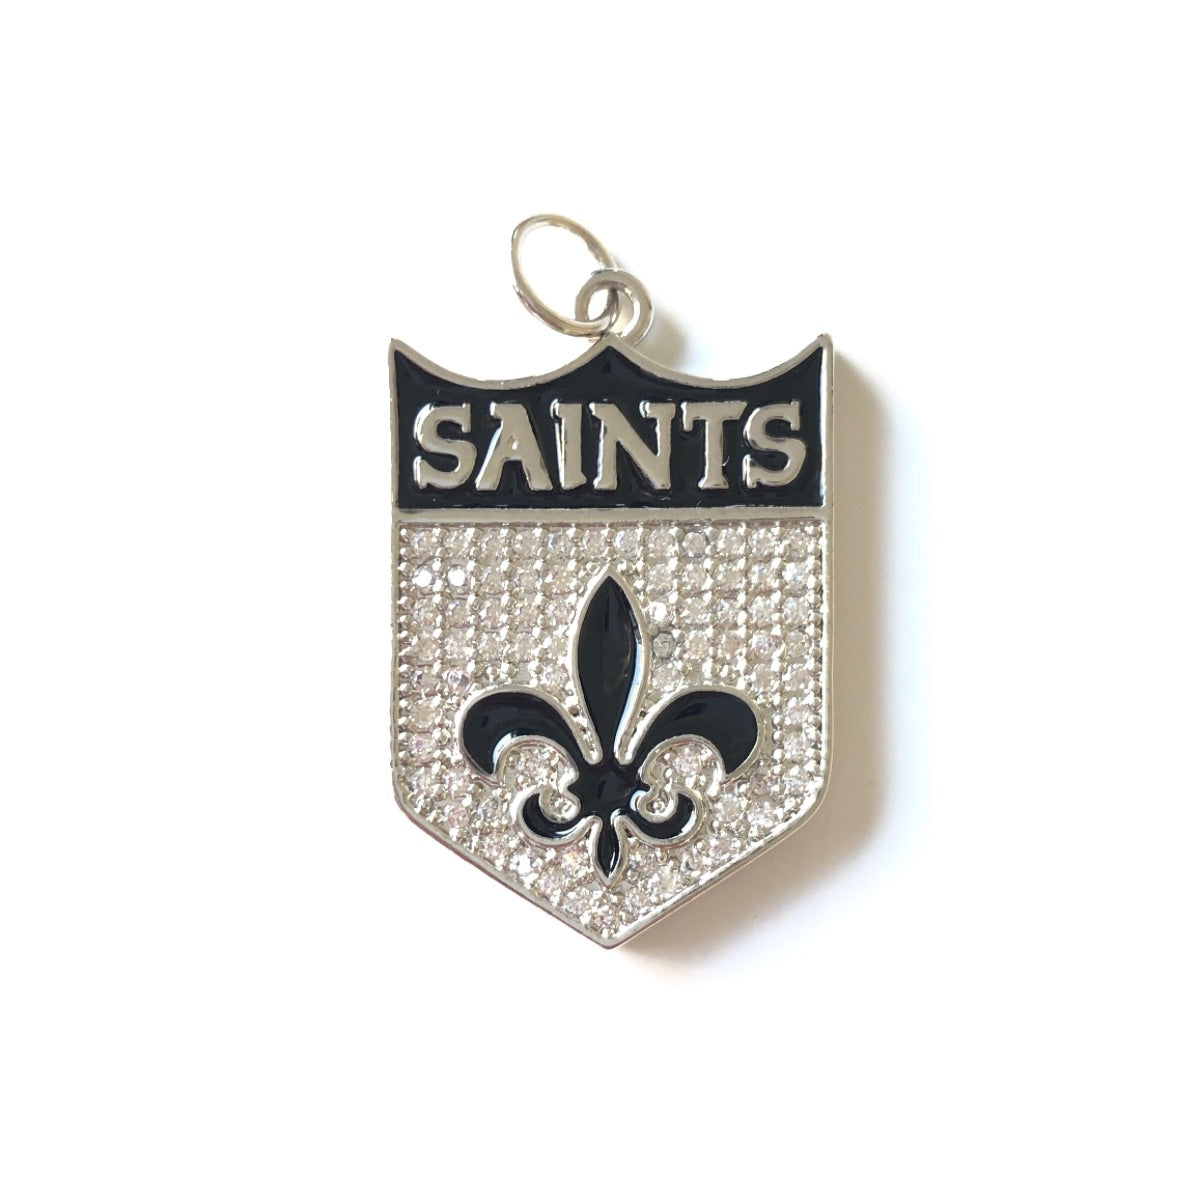 10pcs/lot 31*20mm Fleur De Lis CZ Saints Shield Charms CZ Paved Charms American Football Sports Louisiana Inspired New Charms Arrivals Charms Beads Beyond